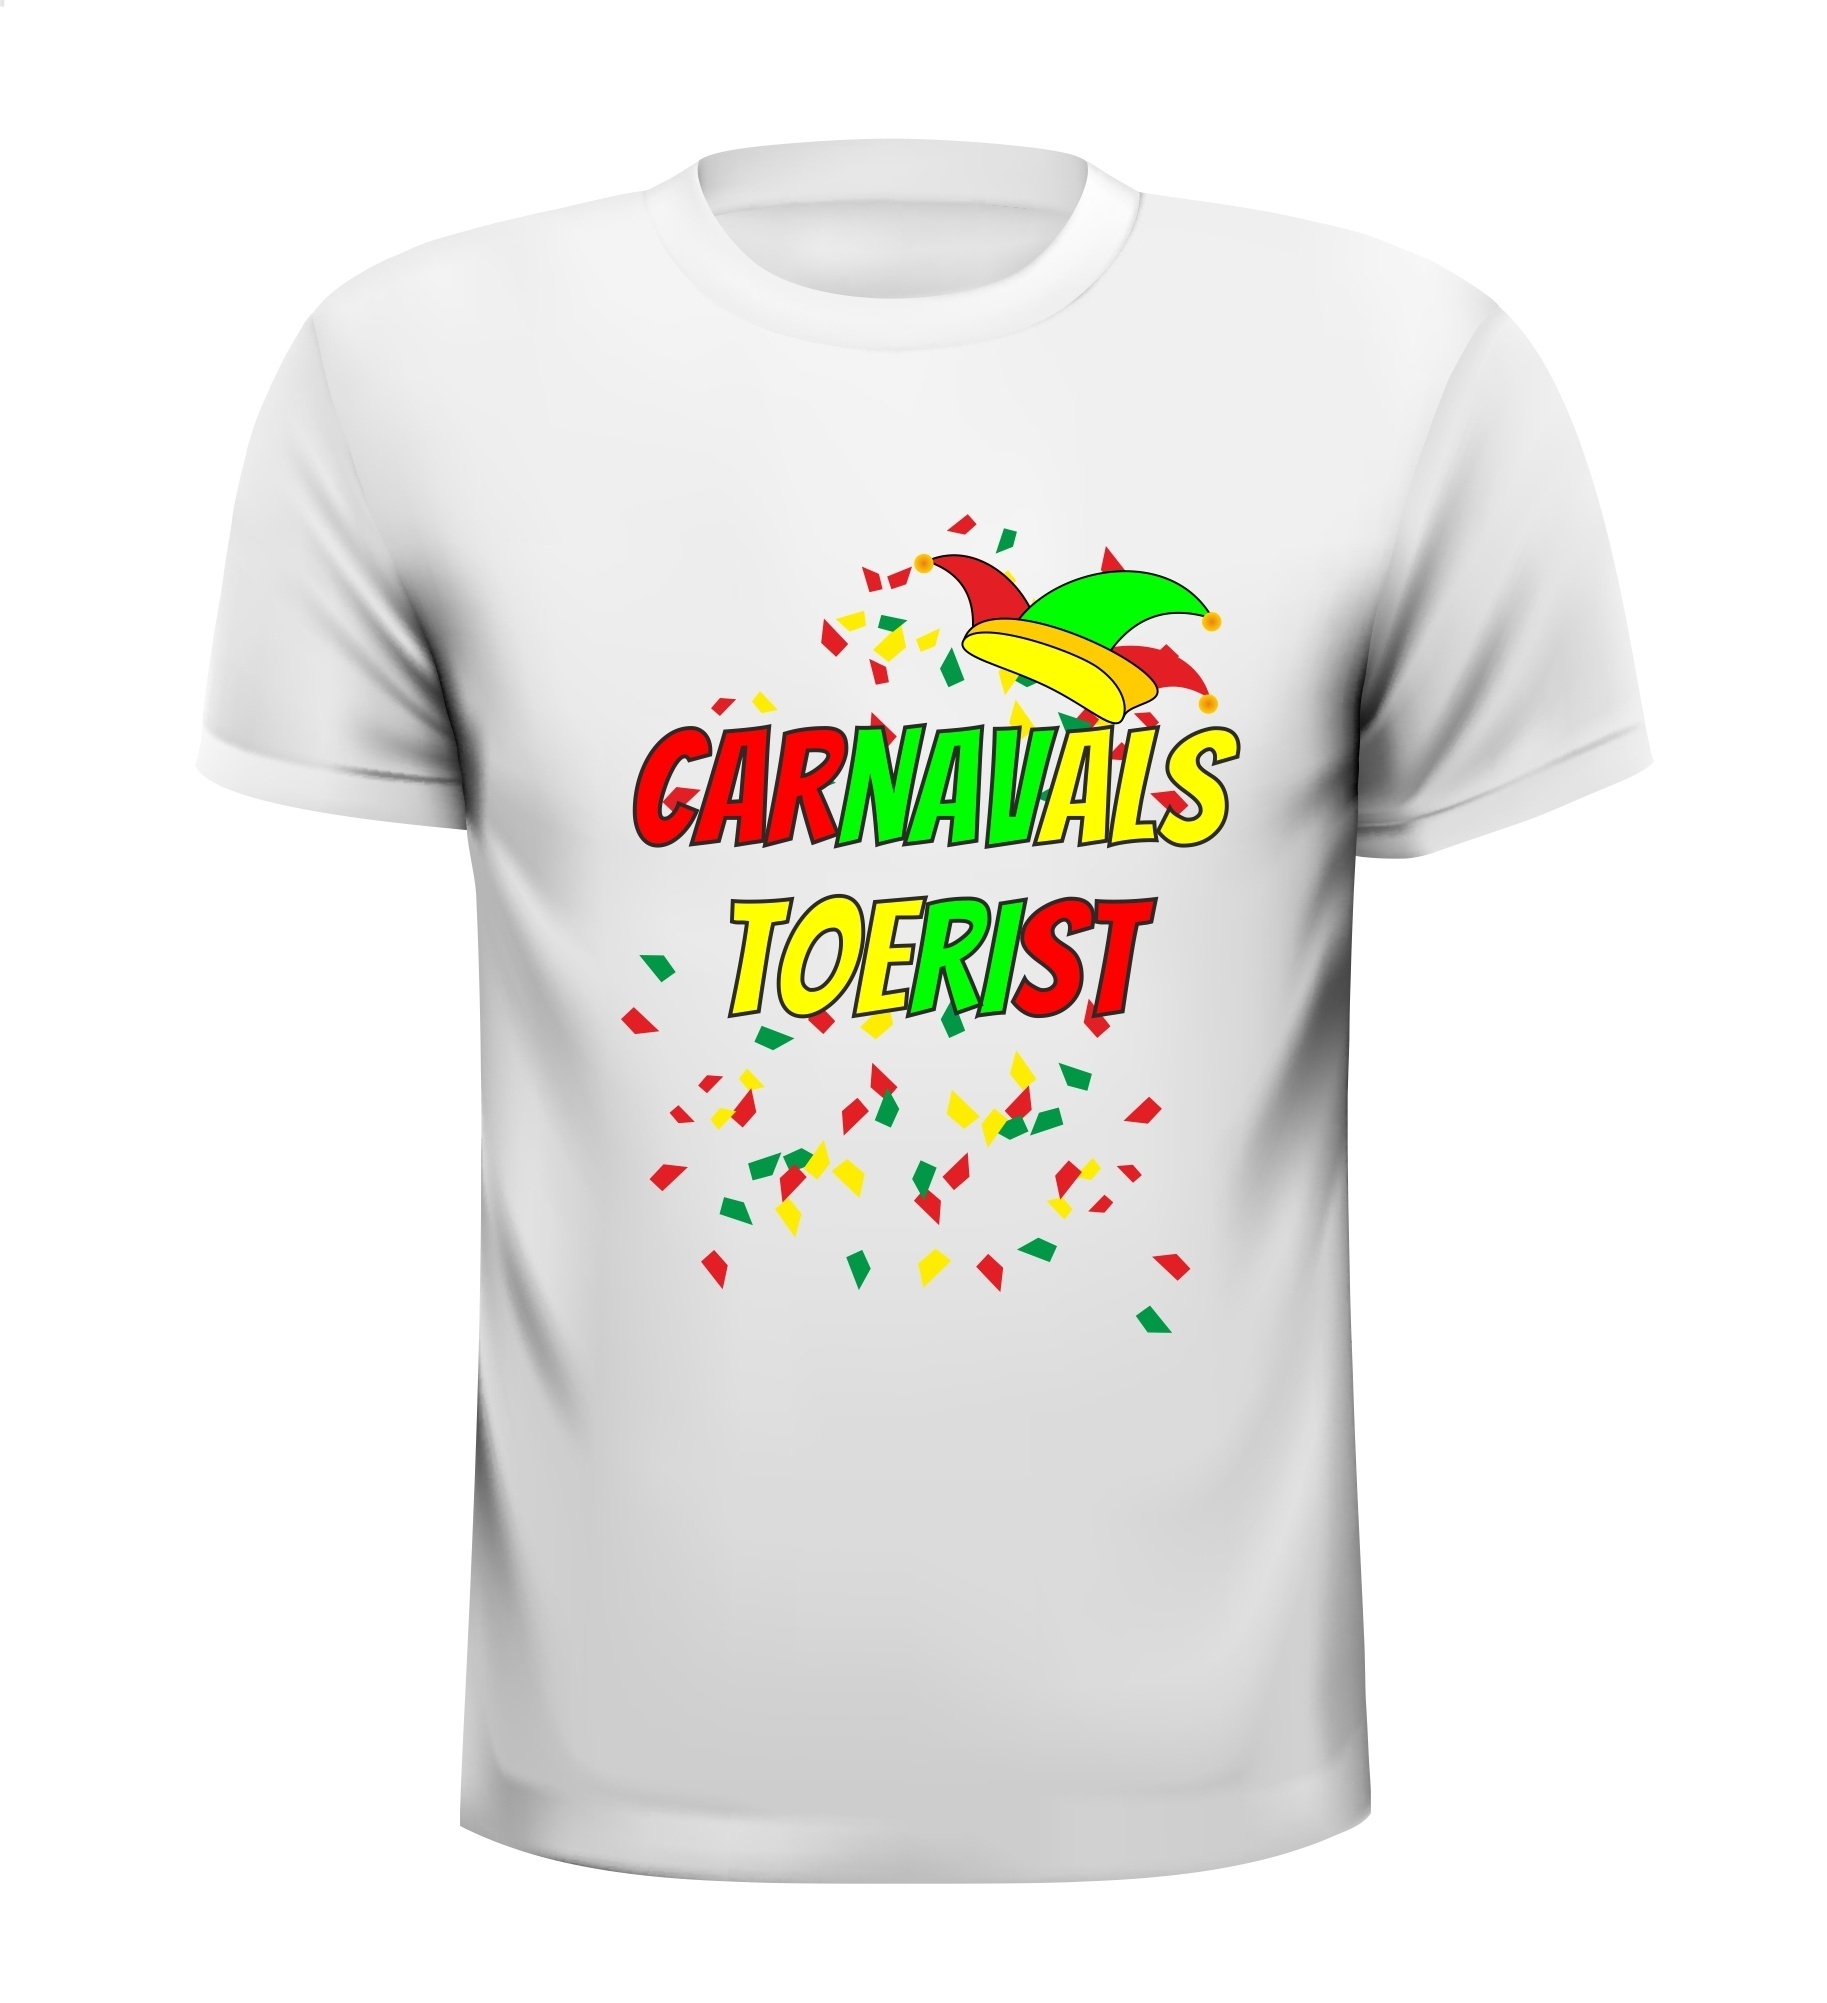 Carnavalstoerist T-shirt